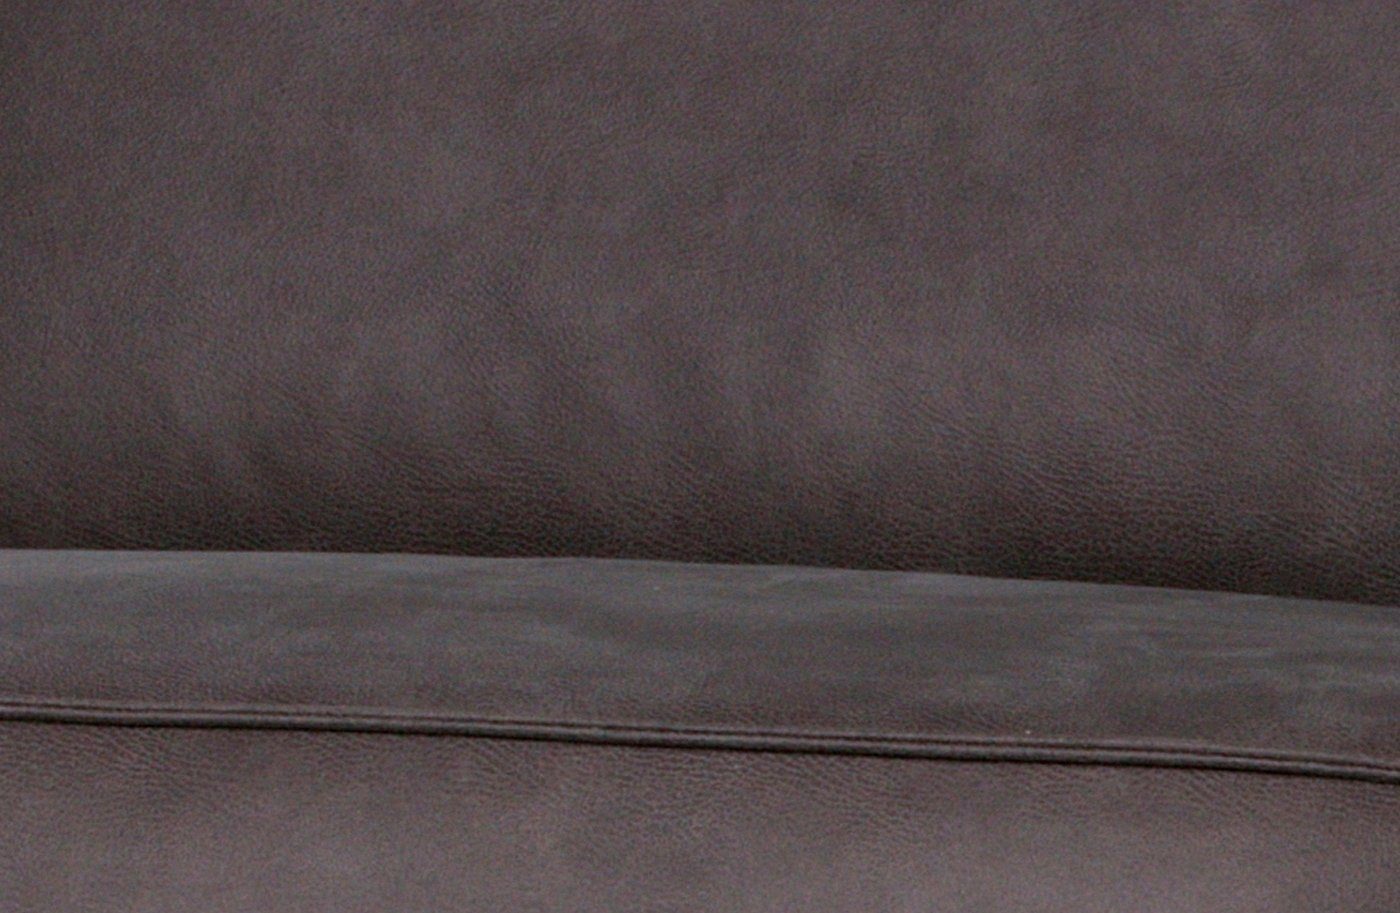 BePureHome Sofa - freistellbar Grey, Statement 3-Sitzer Sofa Leder